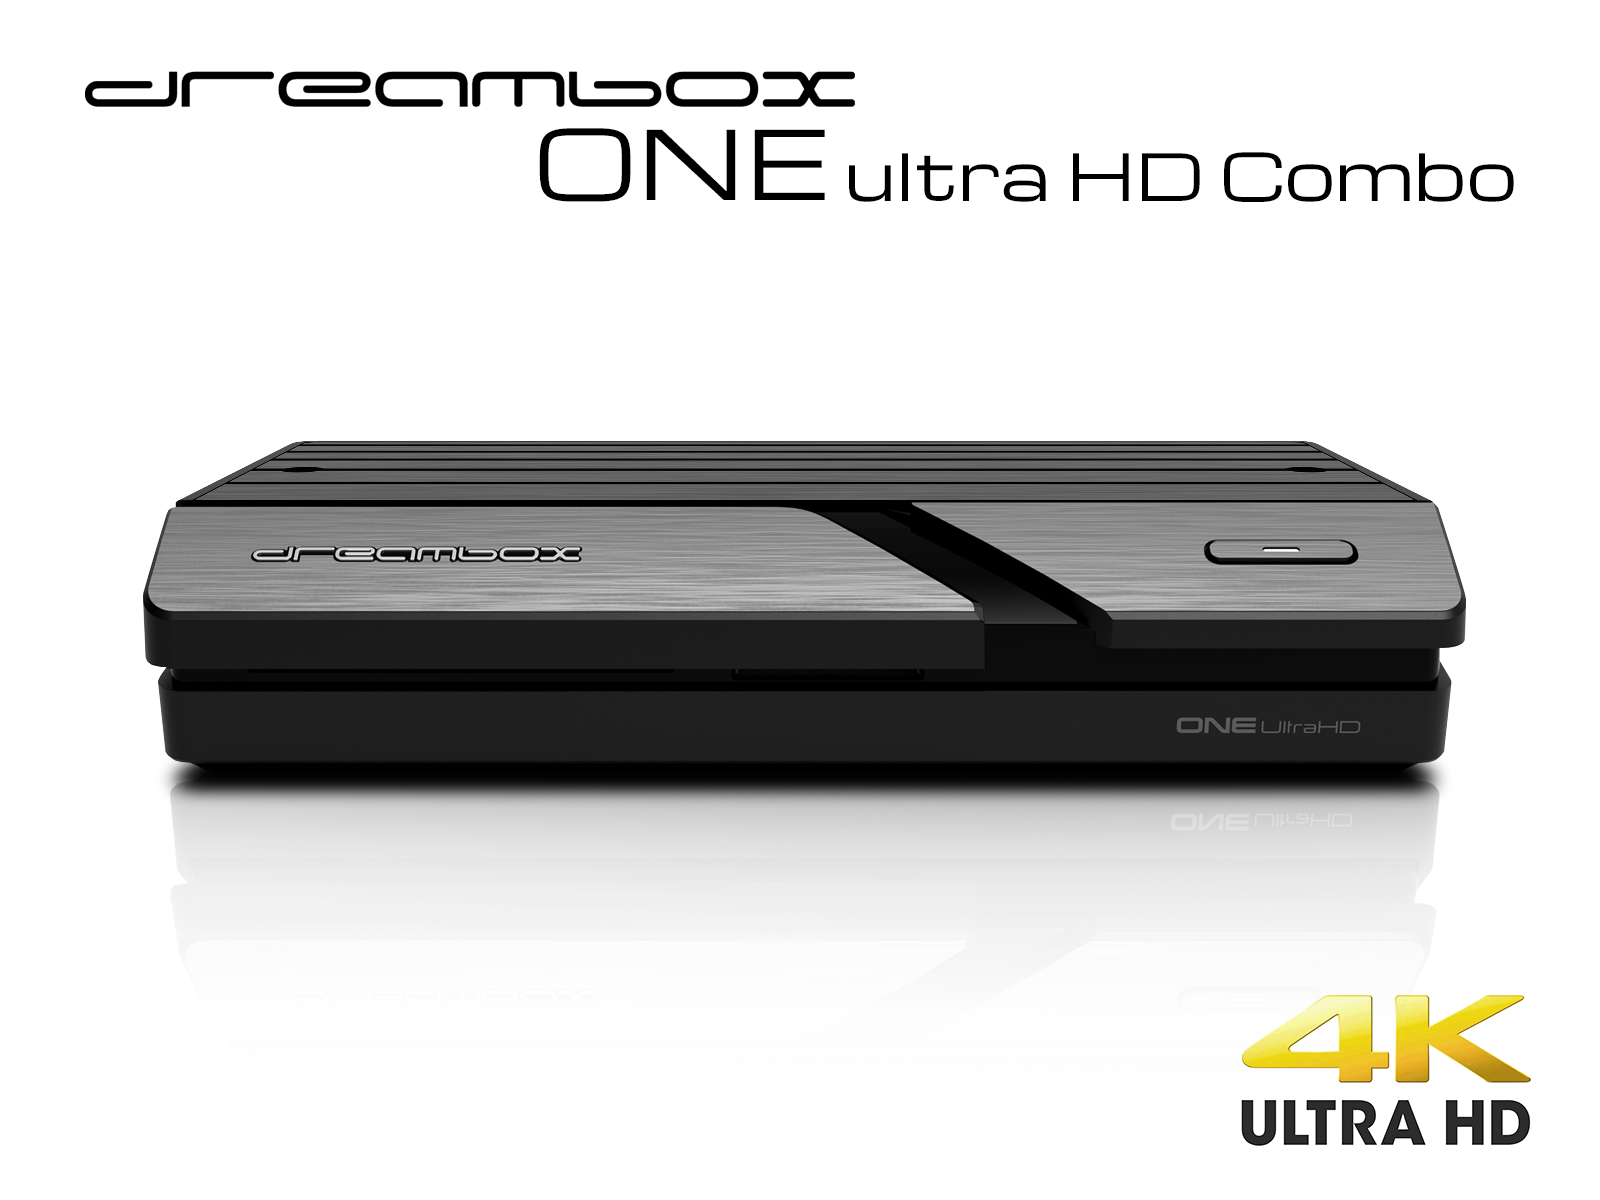 Dreambox One Combo Ultra HD BT 1x DVB-S2X / 1xDVB-C/T2 Tuner 4K 2160p E2 Linux Dual Wifi H.265